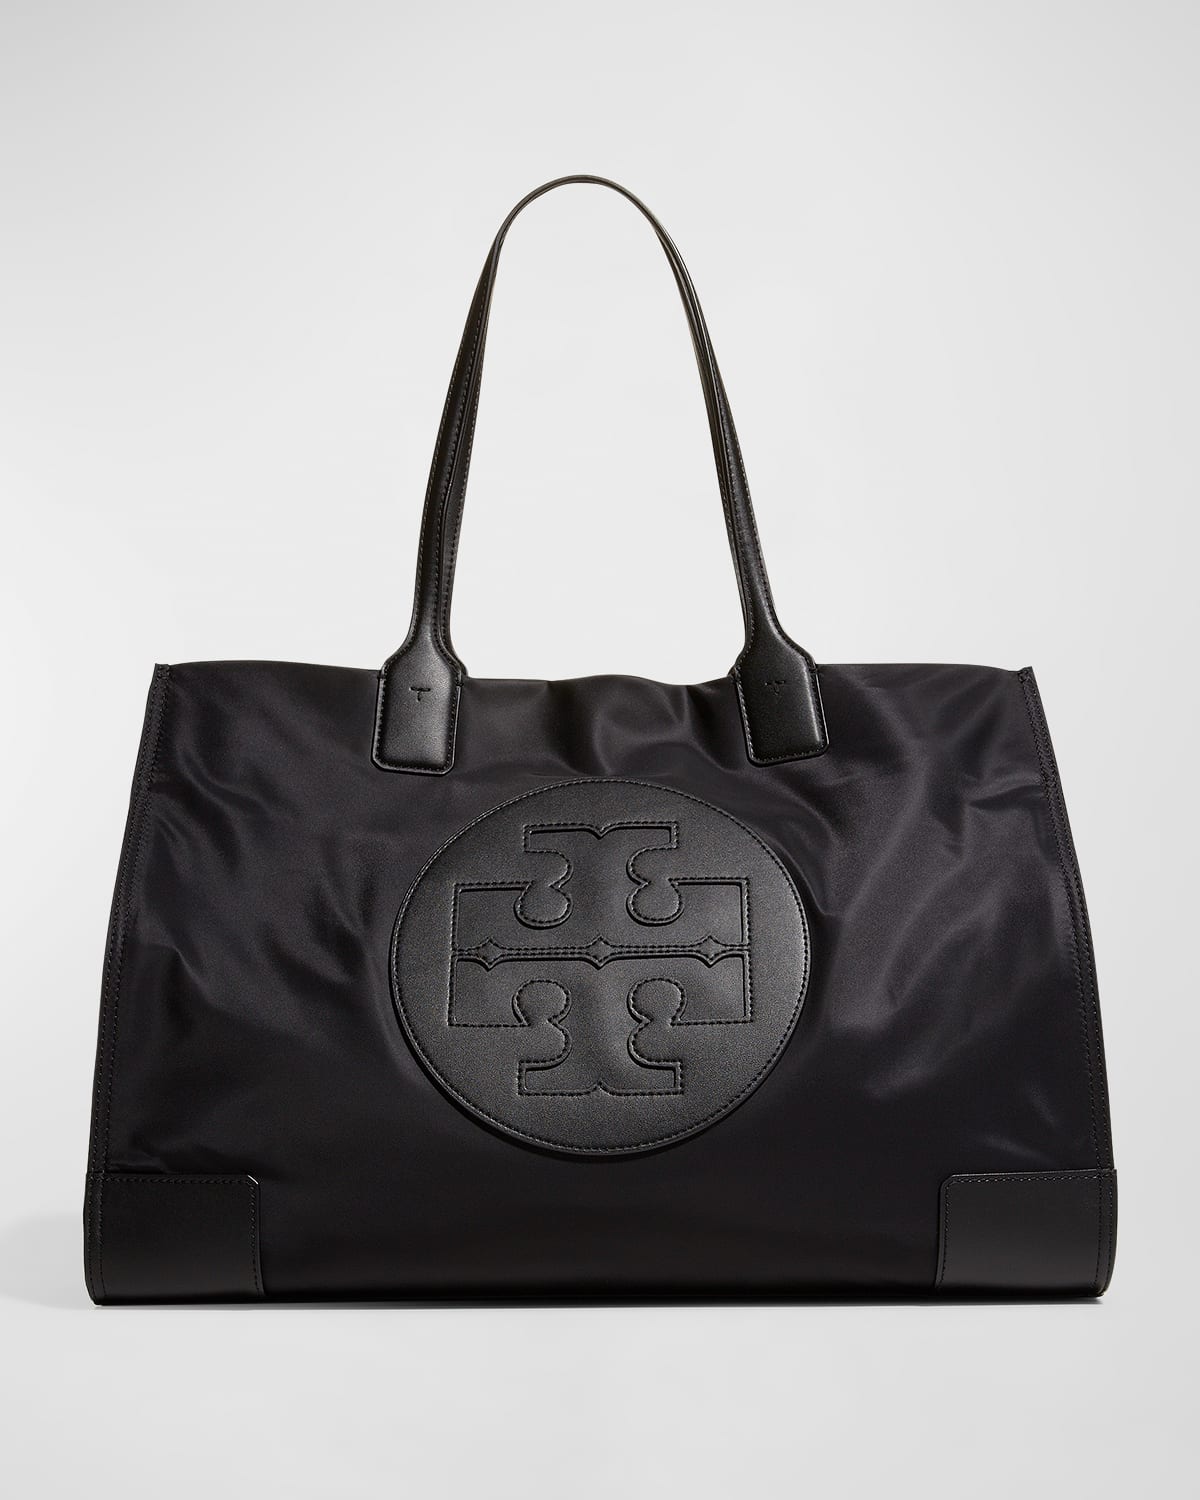 Tory Burch Imported Leather Handbag | Neiman Marcus